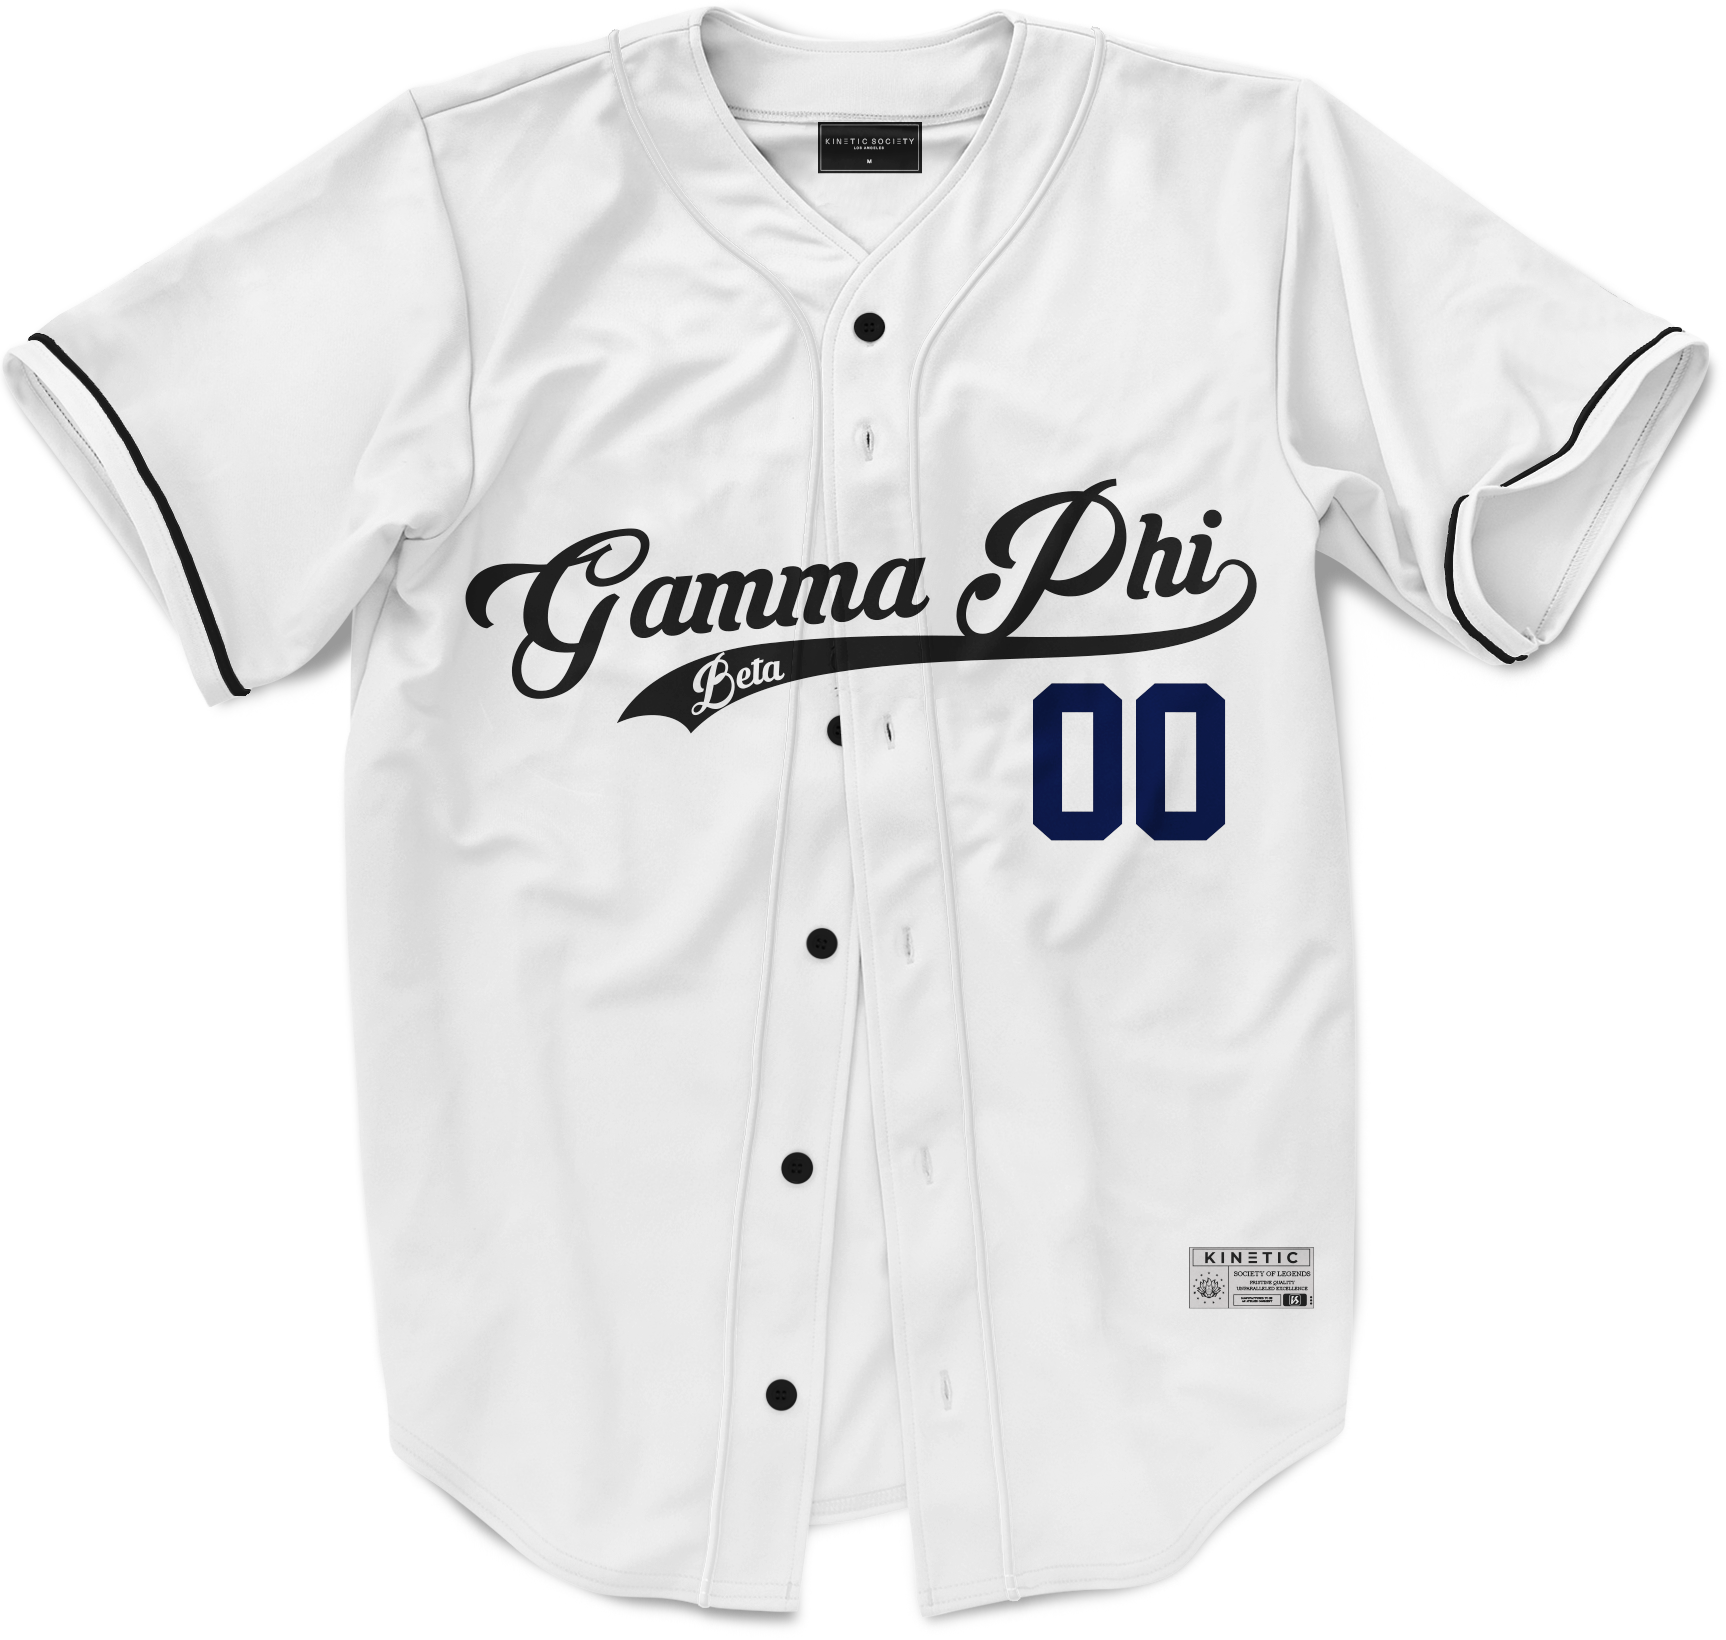 Gamma Phi Beta - Classic Ballpark Blue Baseball Jersey